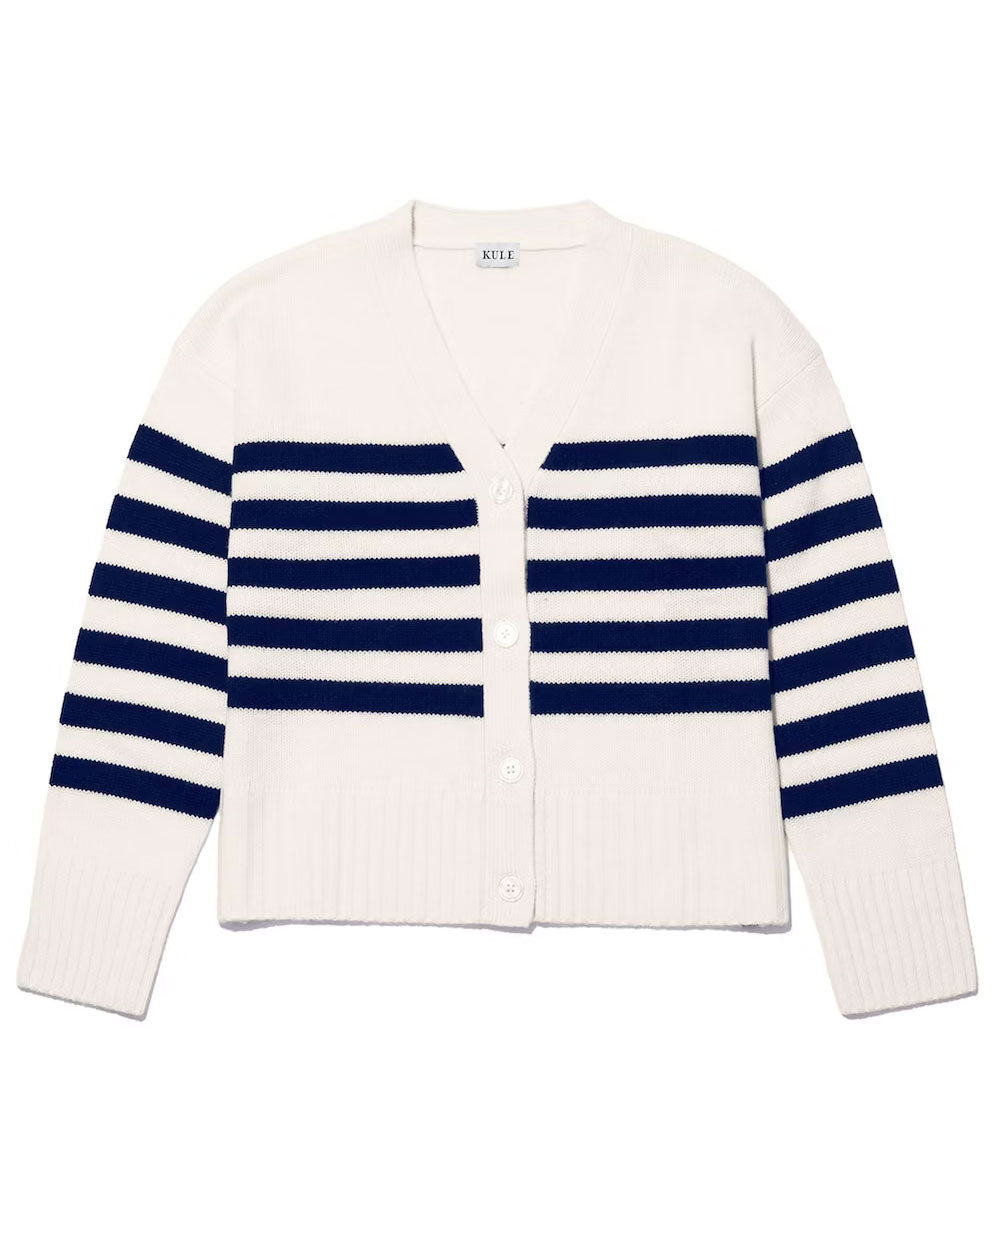 The Raffa Cream/Navy Sweater